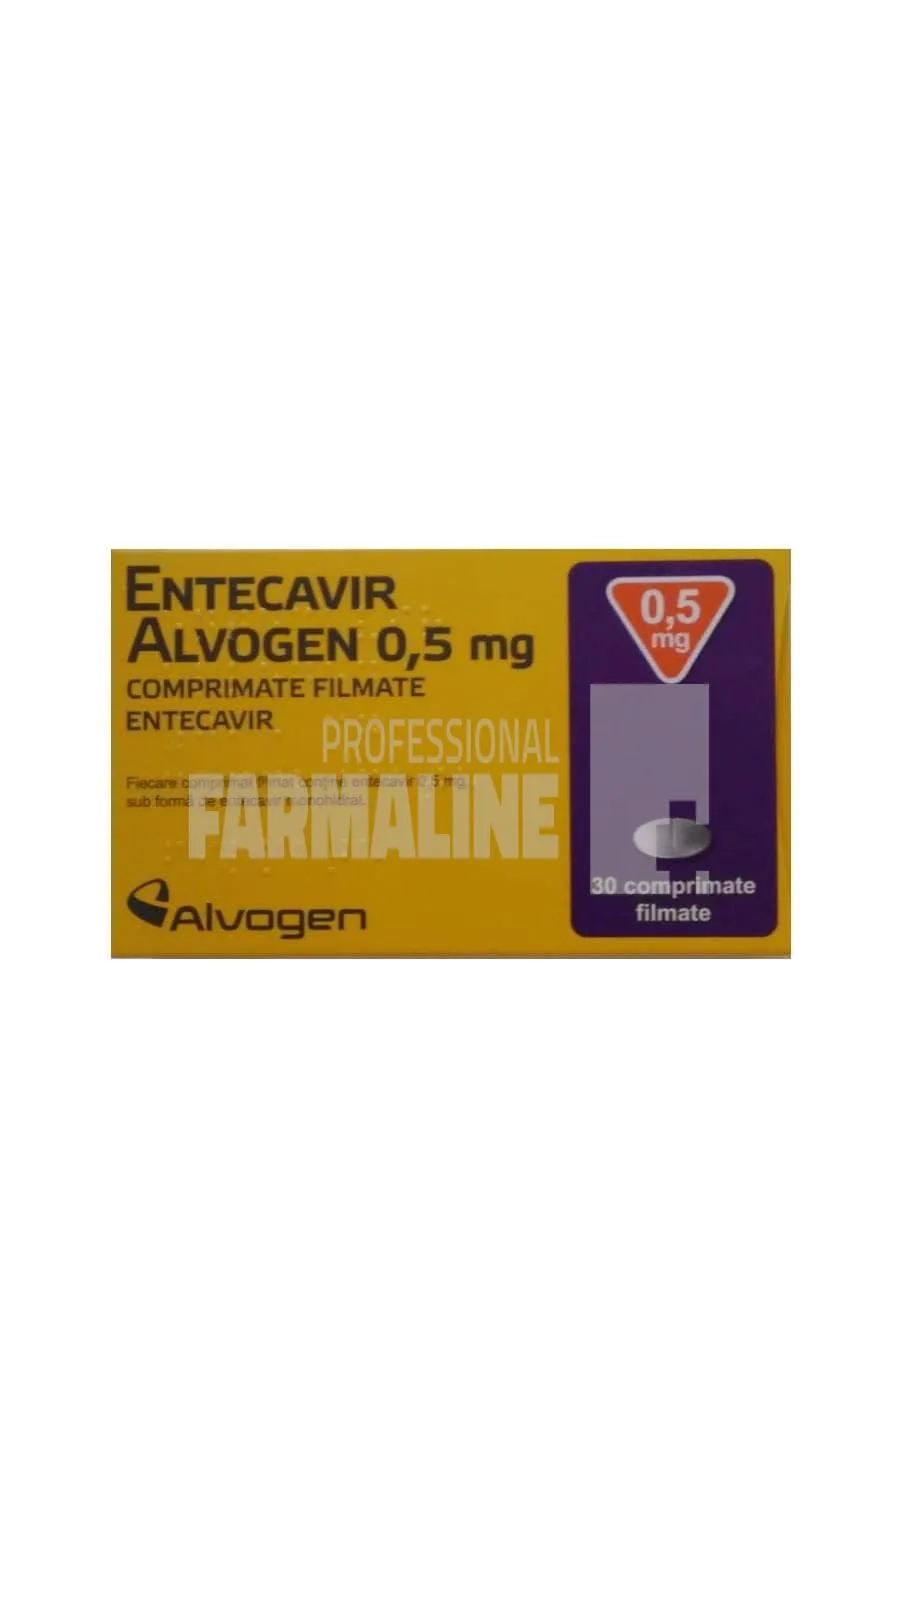 Entecavir Alvogen 0,5 mg 30 comprimate